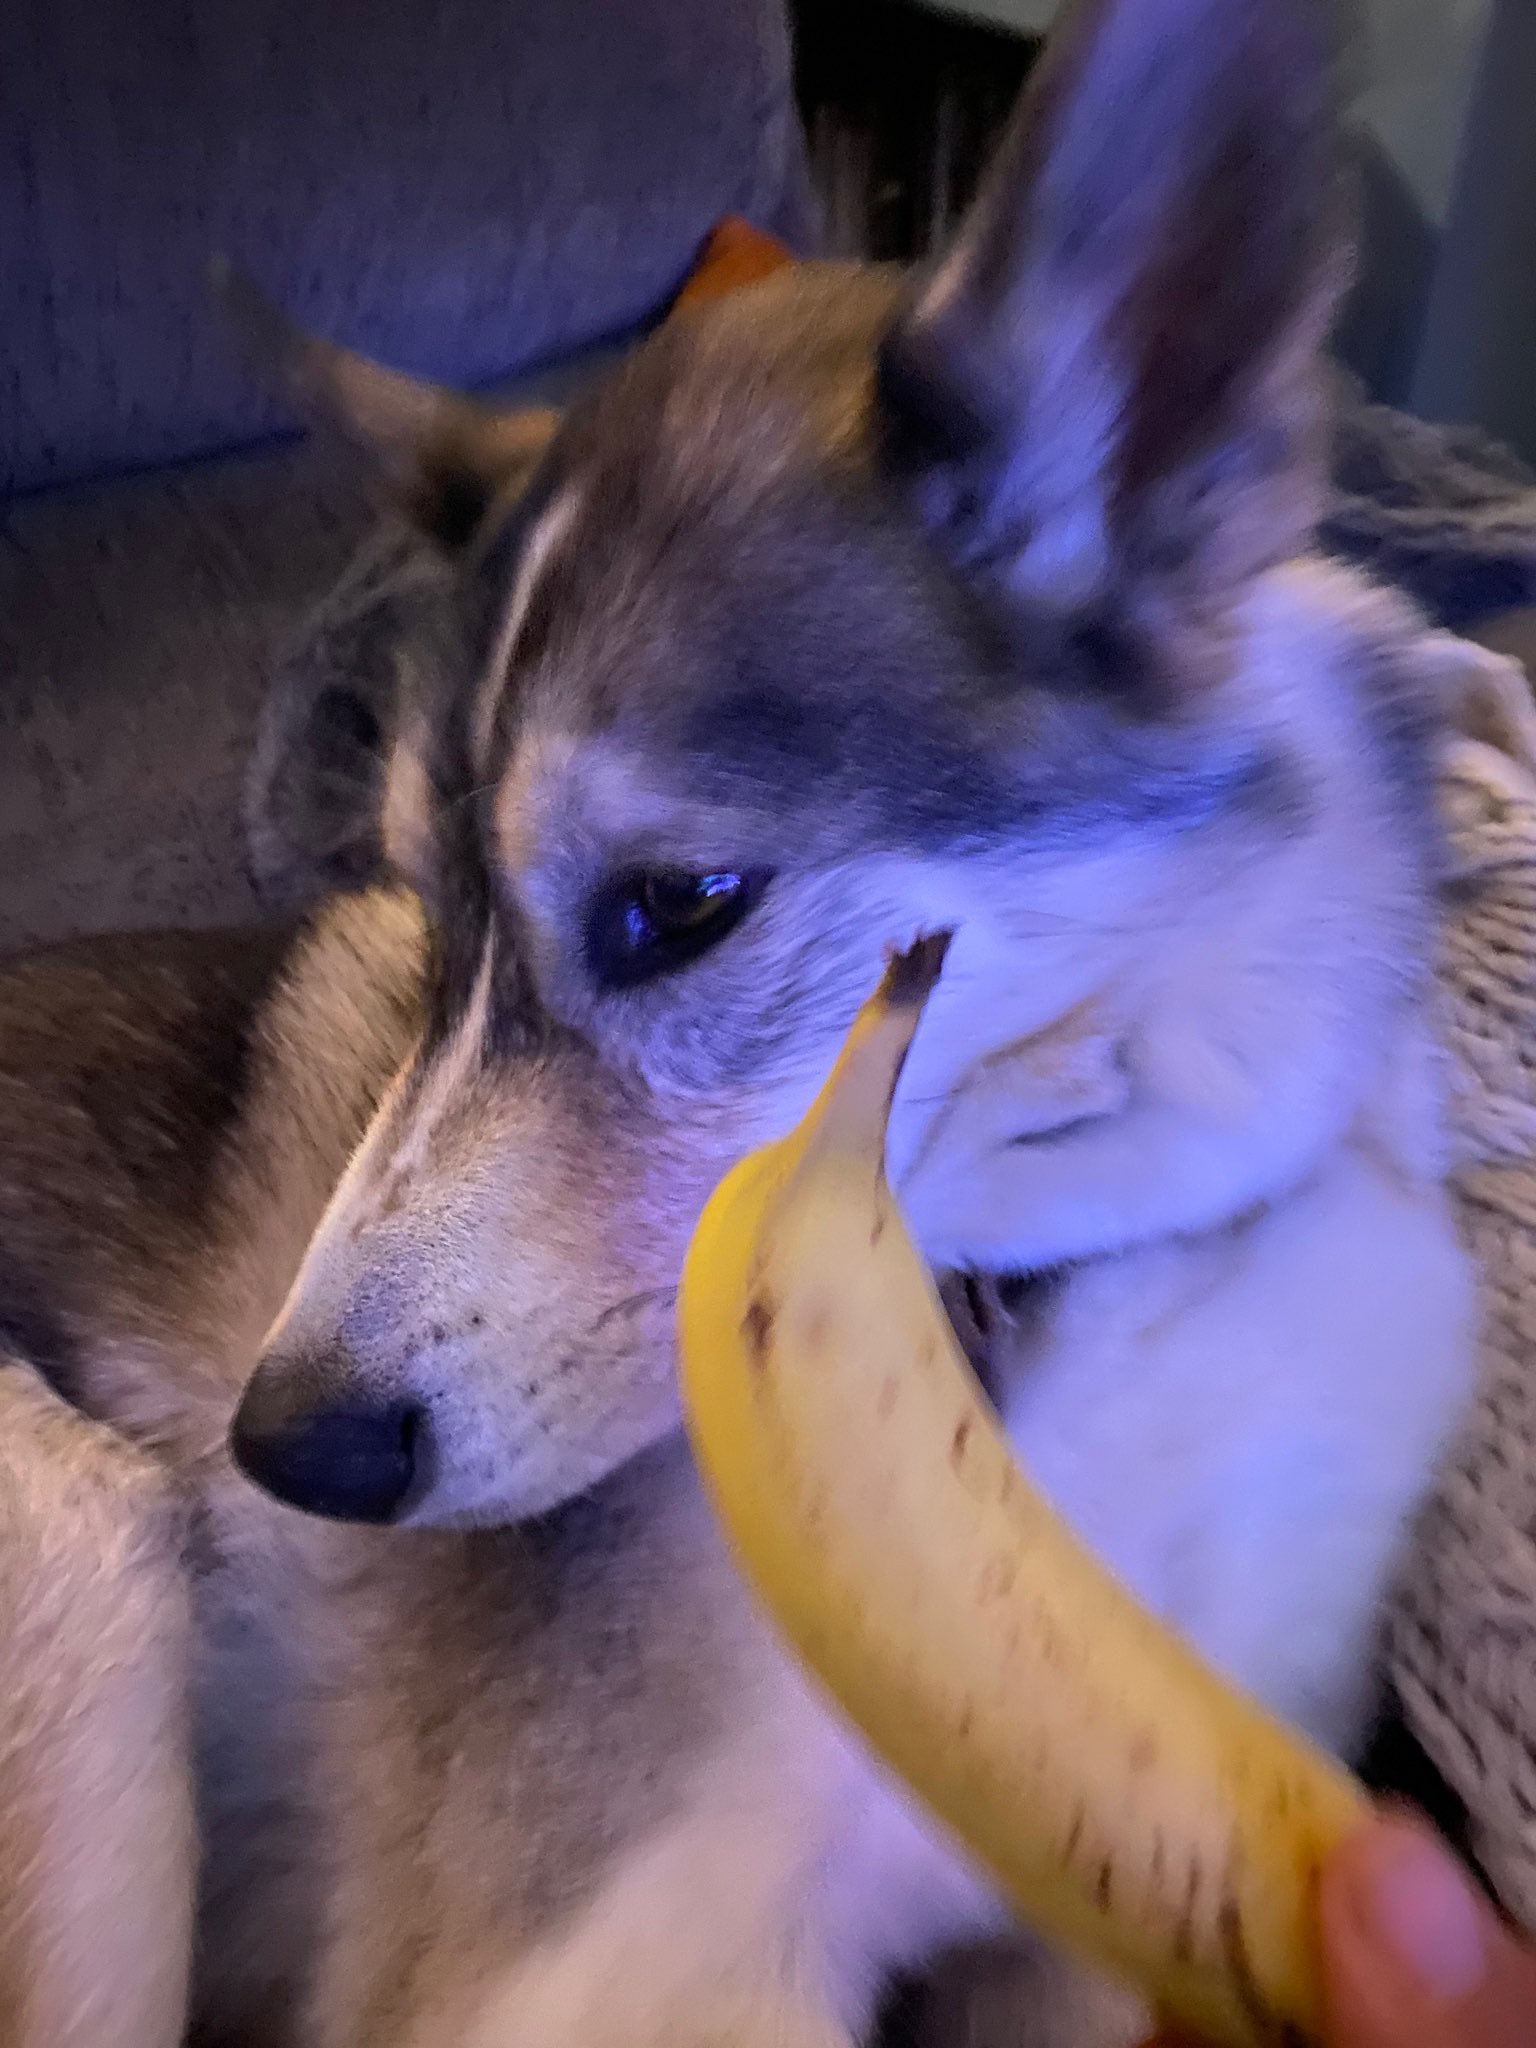 A dog and a banana (Source: Ciaran Martin)